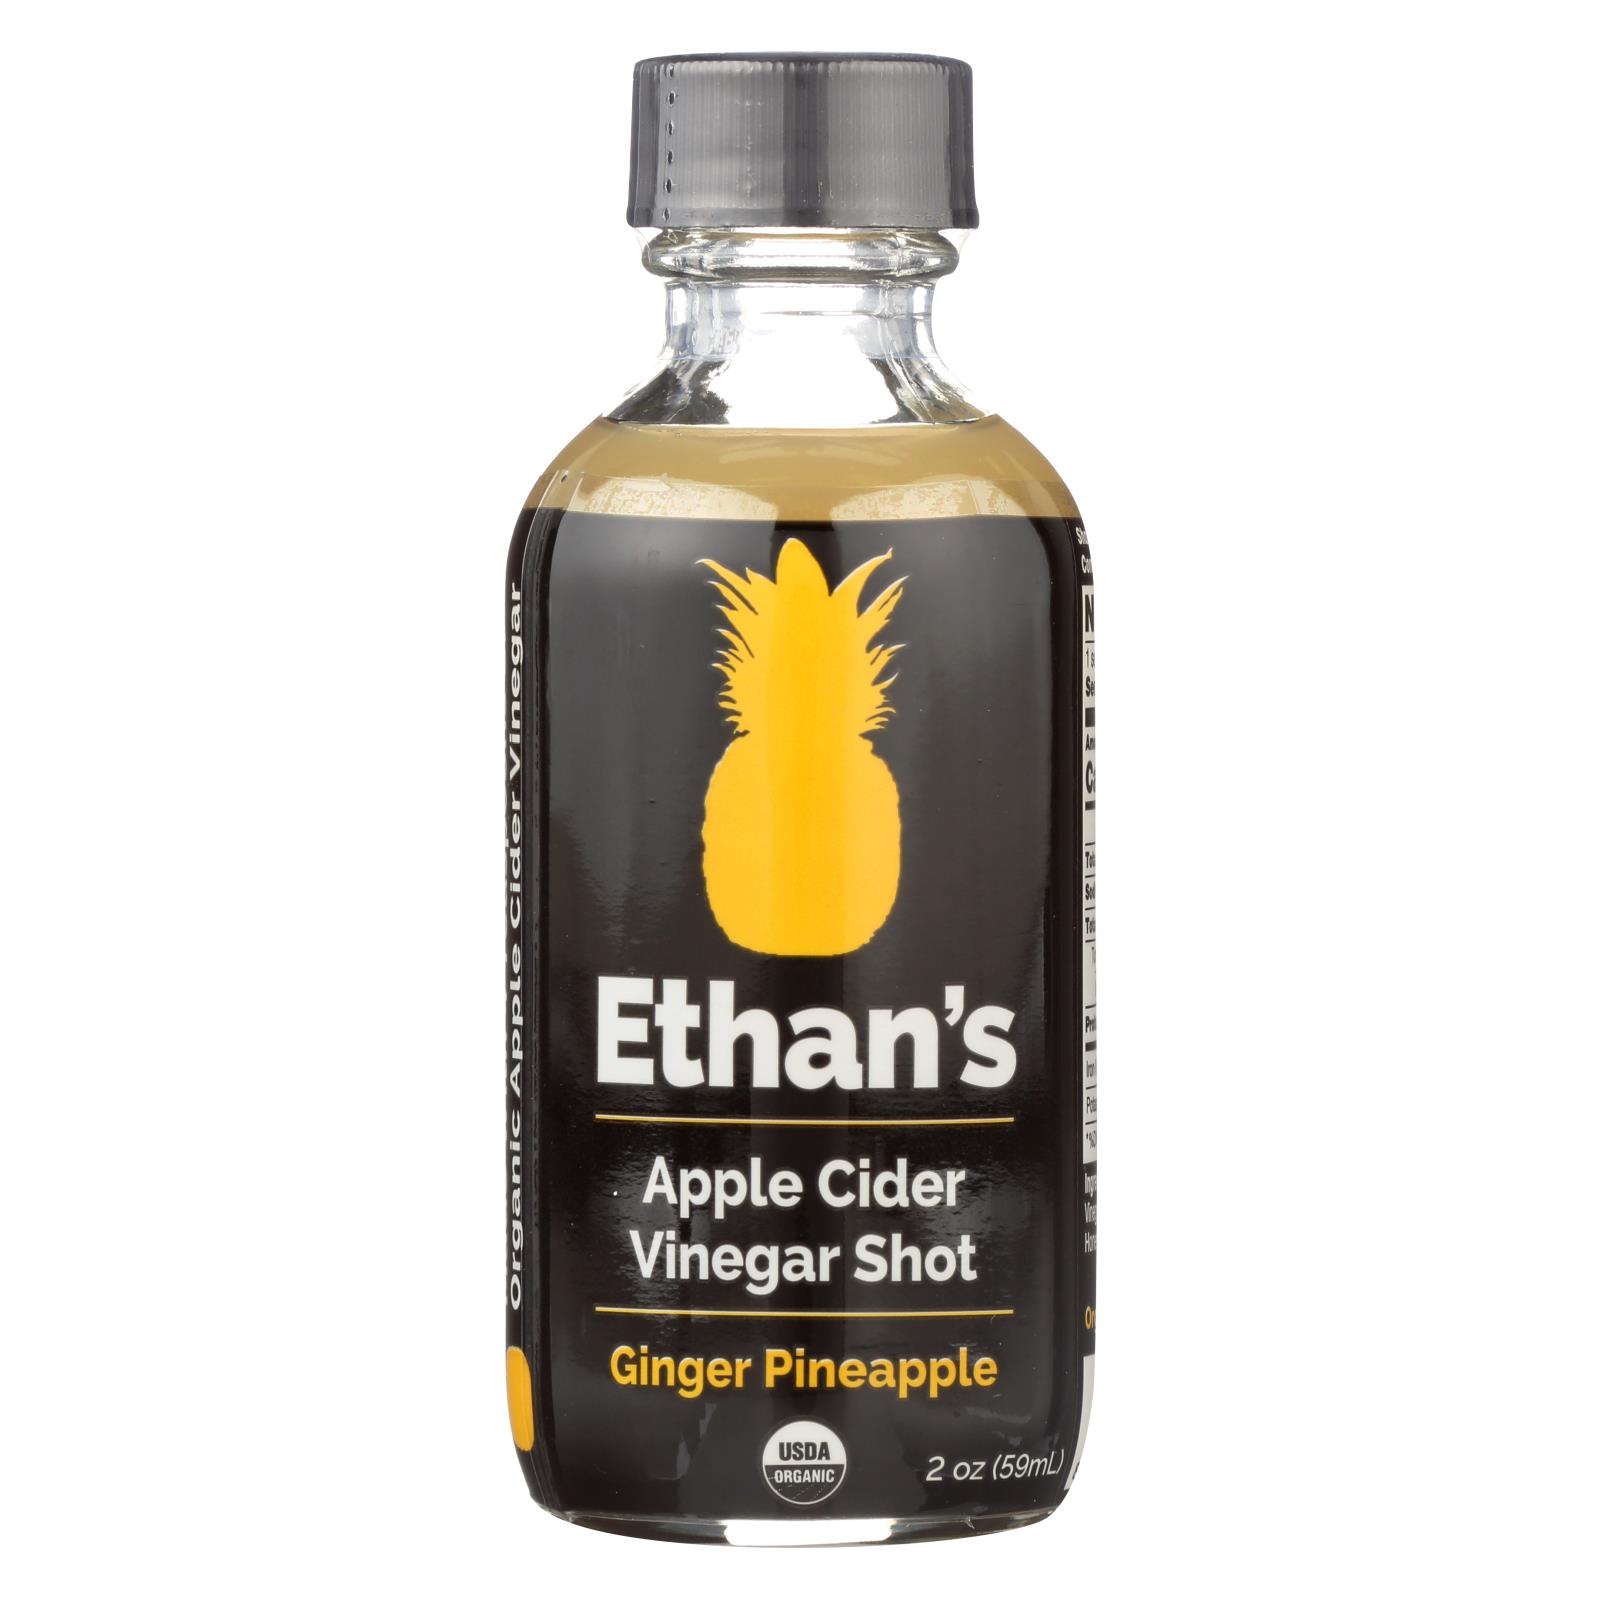 Ethan’S Apple Cider Vinegar Shots Ginger Pineapple Flavor - Case of 12 - 2 OZ